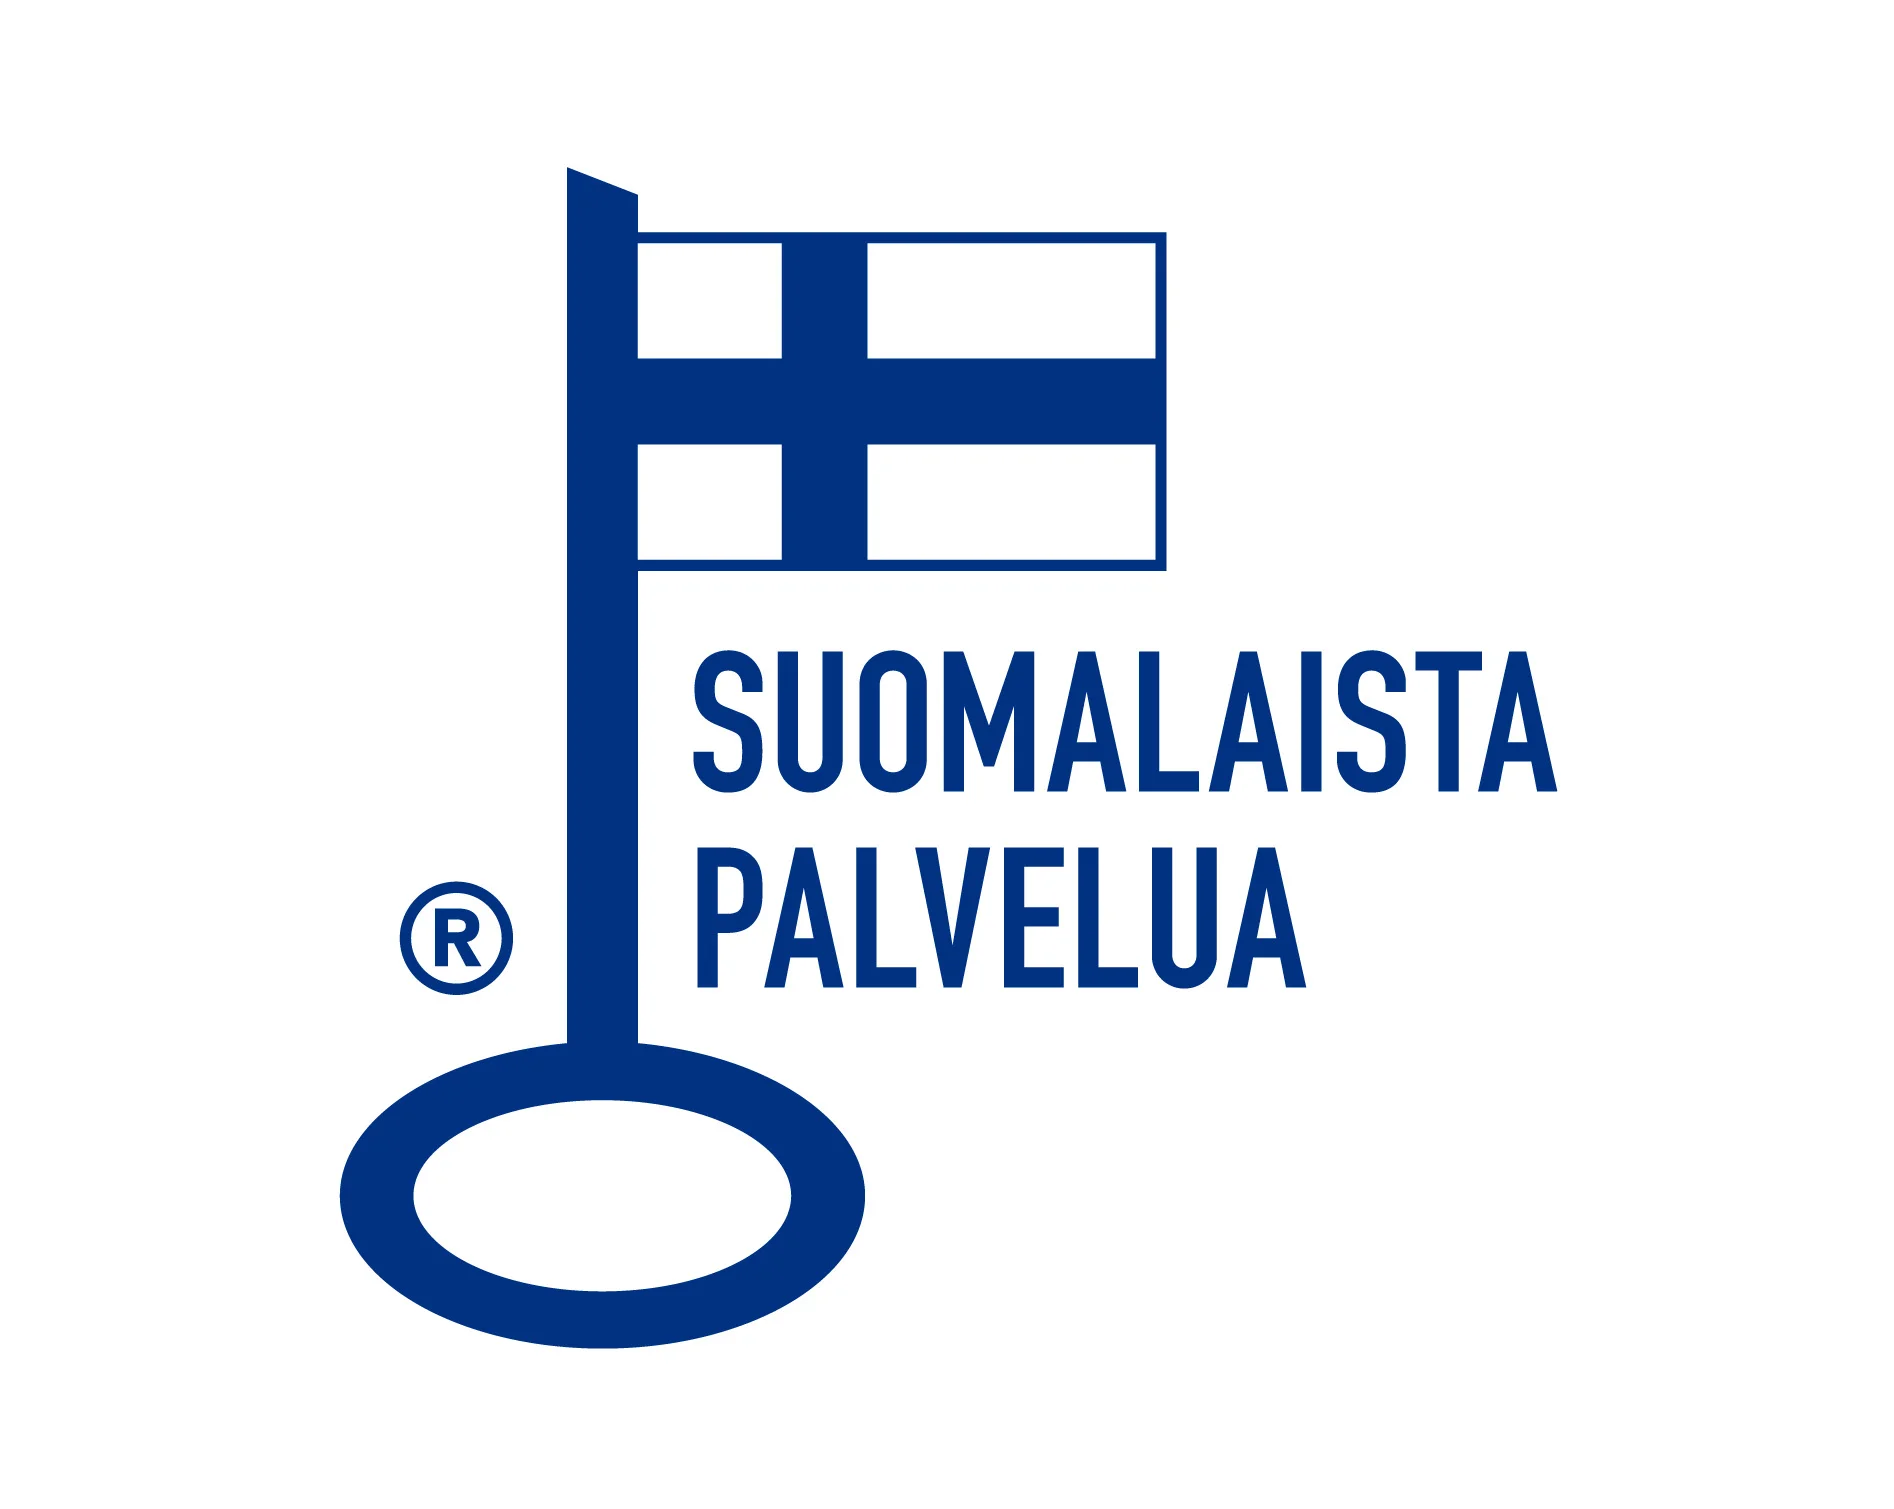 Finnish service blue logo